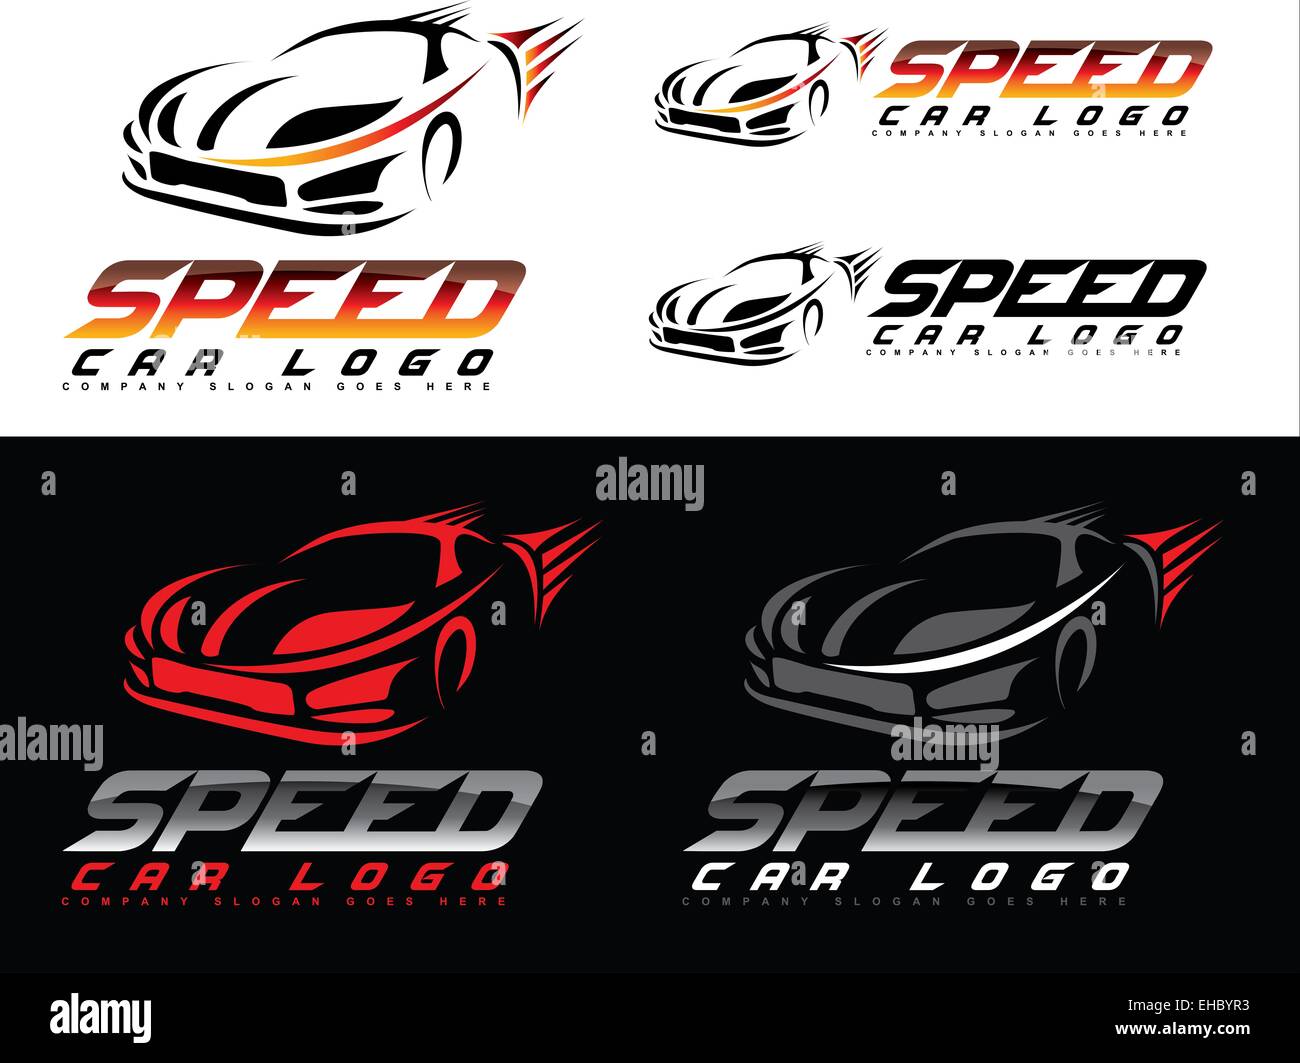 Speed Car Design. Creative Sport Car Icon Vector. Car shape design Stock Photo